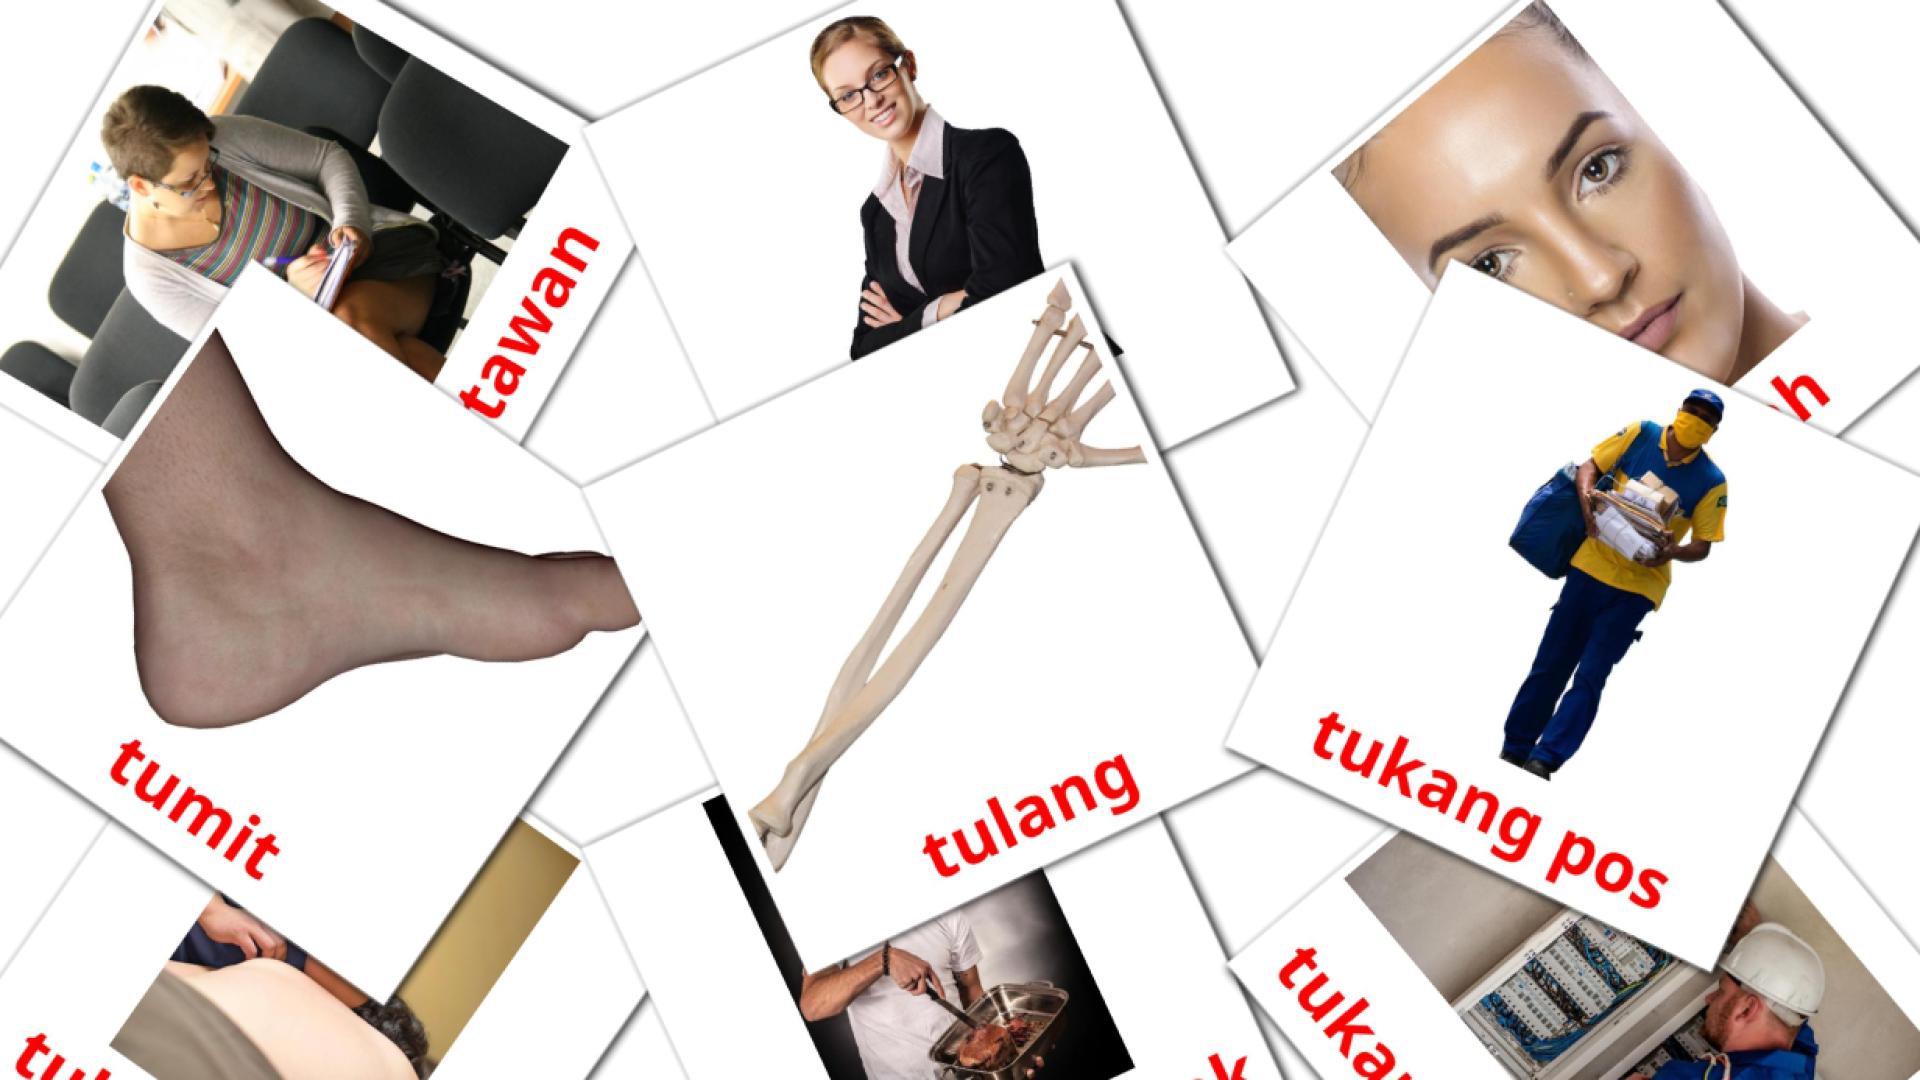 Orang indonesian vocabulary flashcards